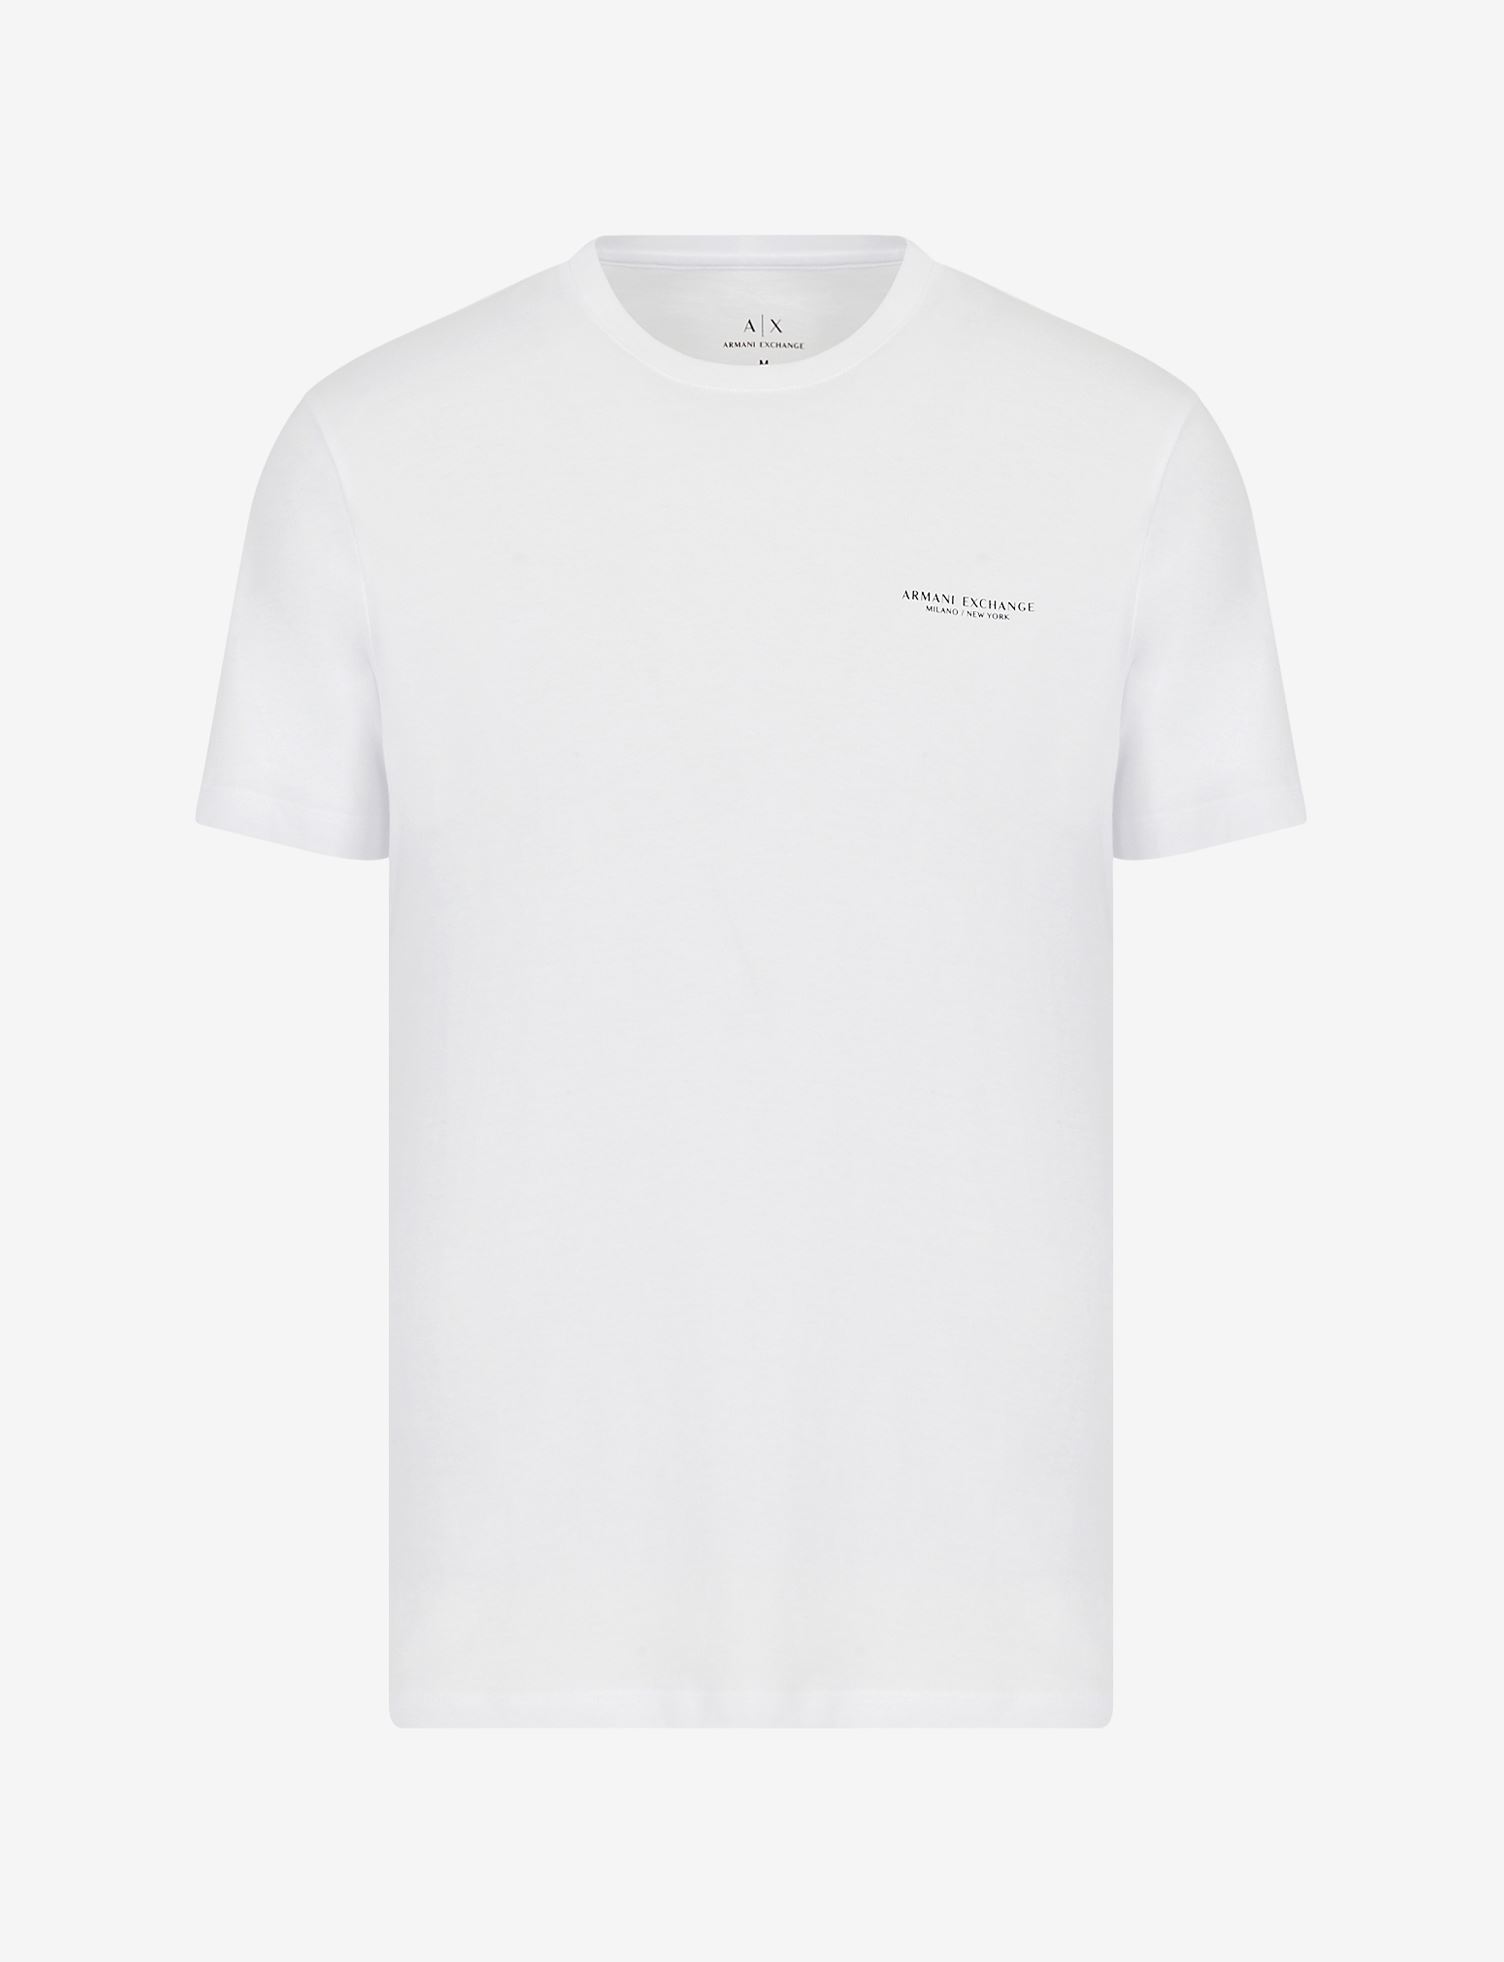 Image of Armani Exchange M's T-shirt uni Grösse XL Herren